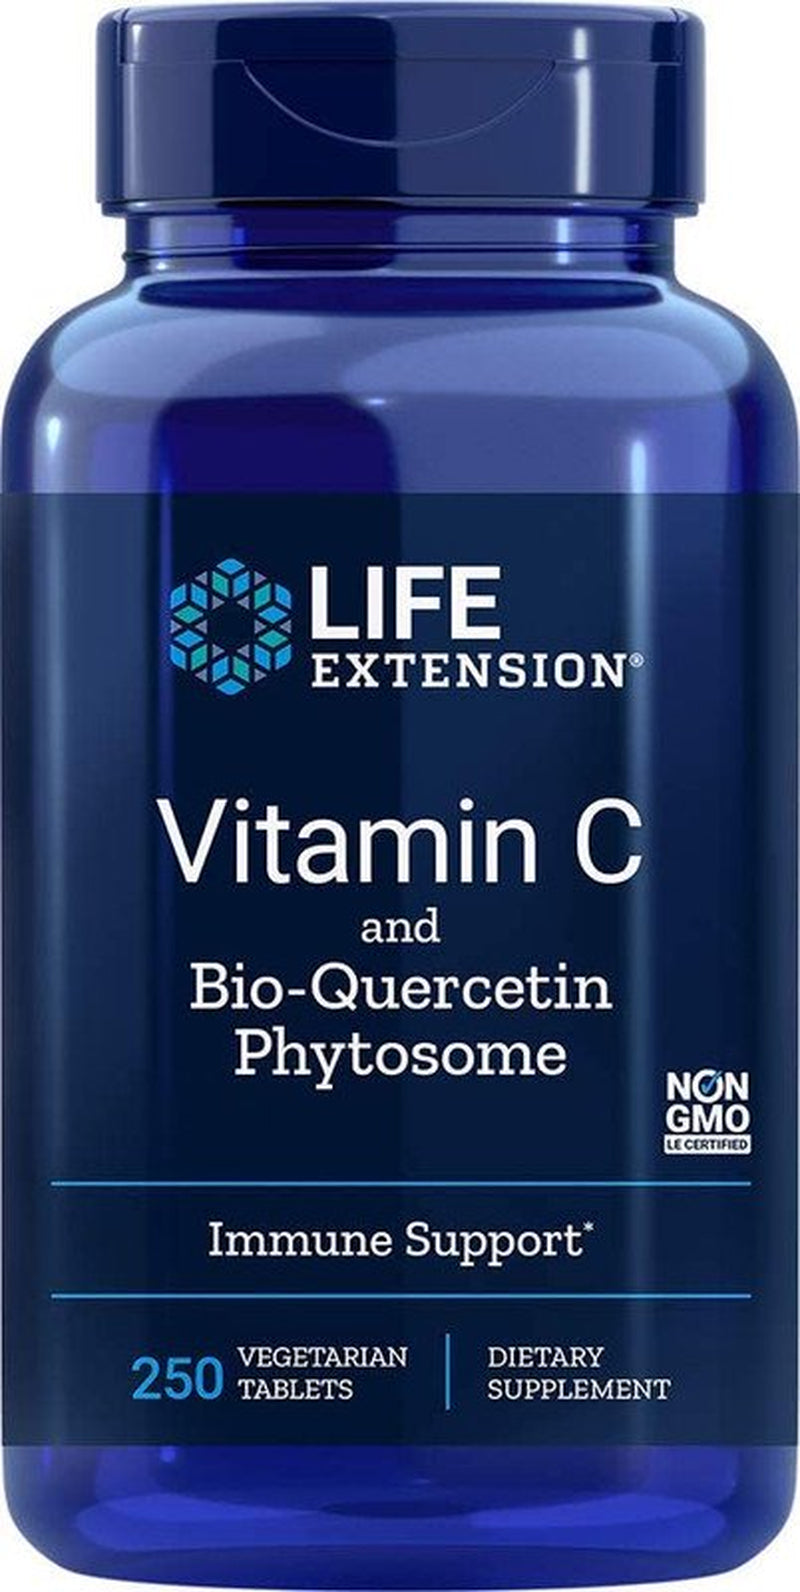 Life Extension Vitamin C 1000 Mg and Bio-Quercetin Phytosome - 250 Veg Tablets